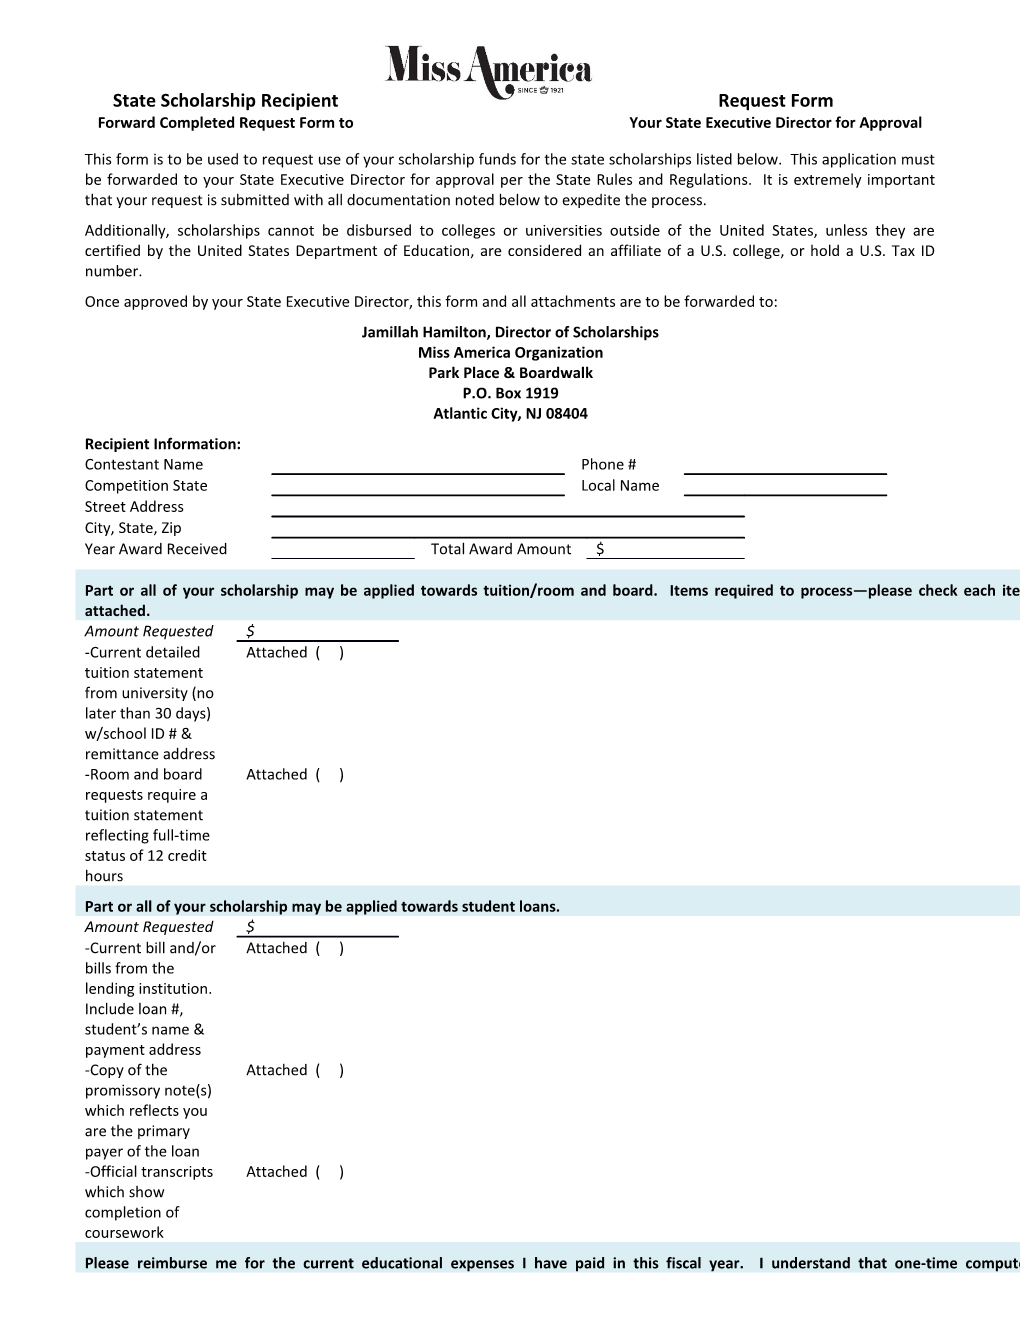 State Scholarship Recipient Request Form